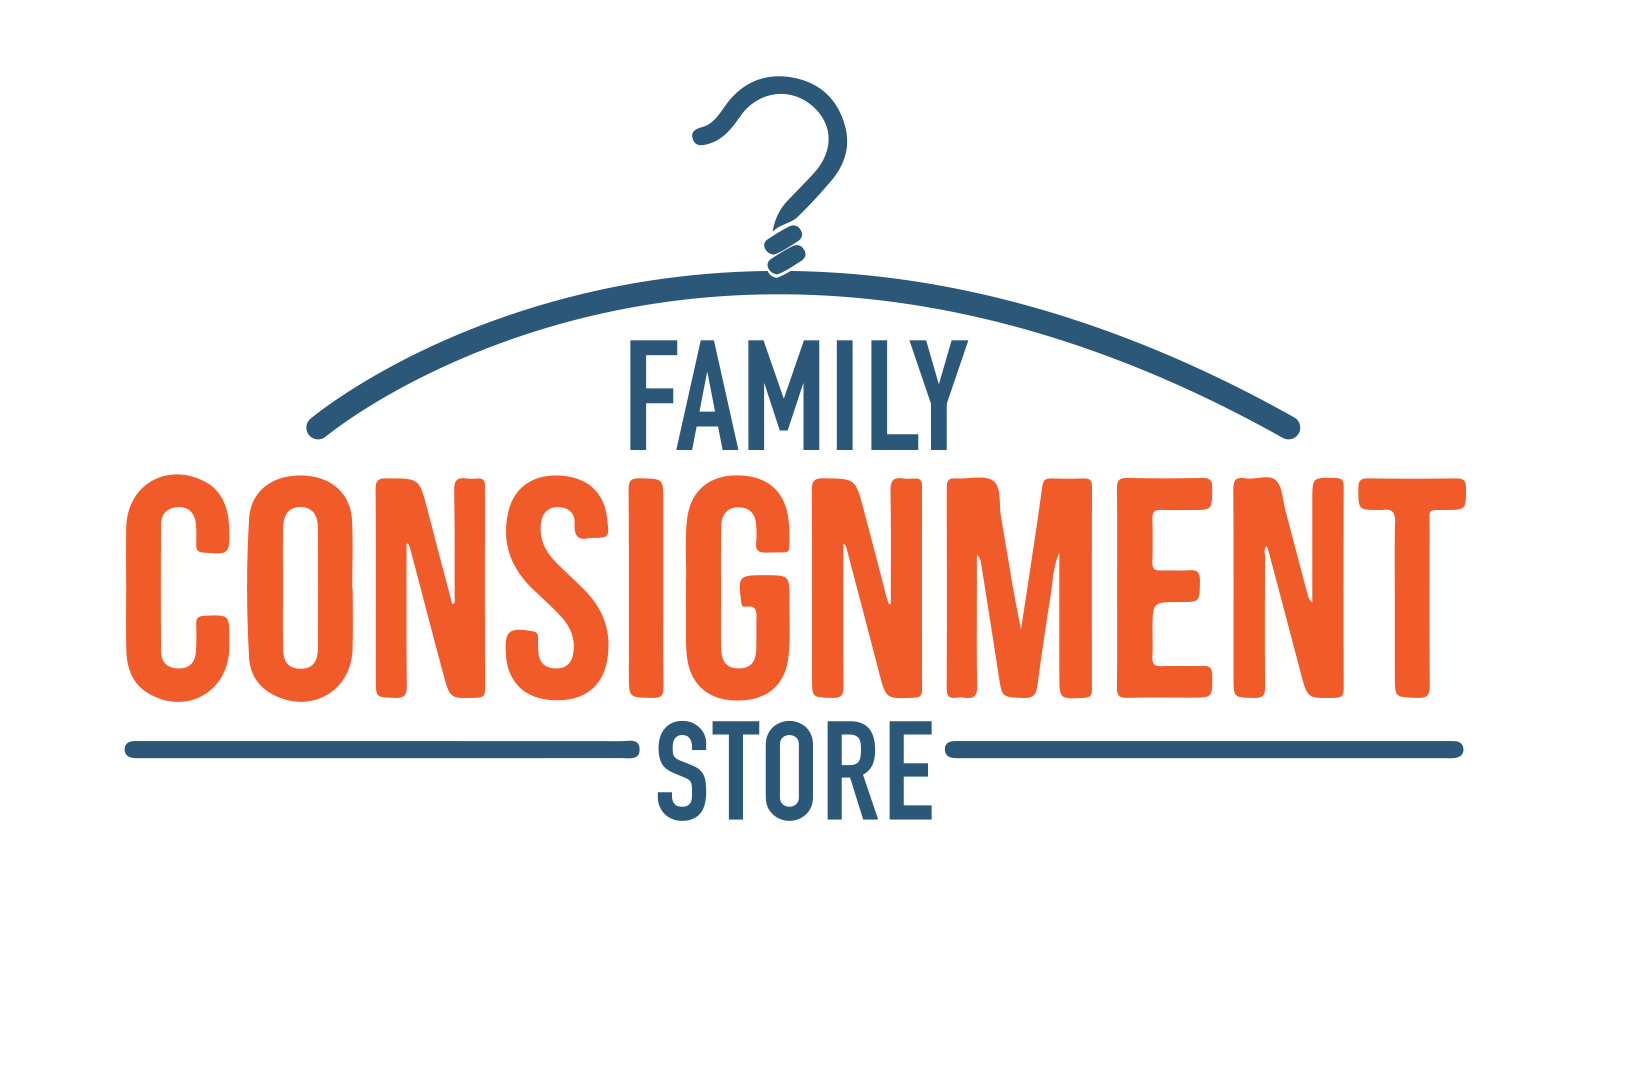 consignment store logo